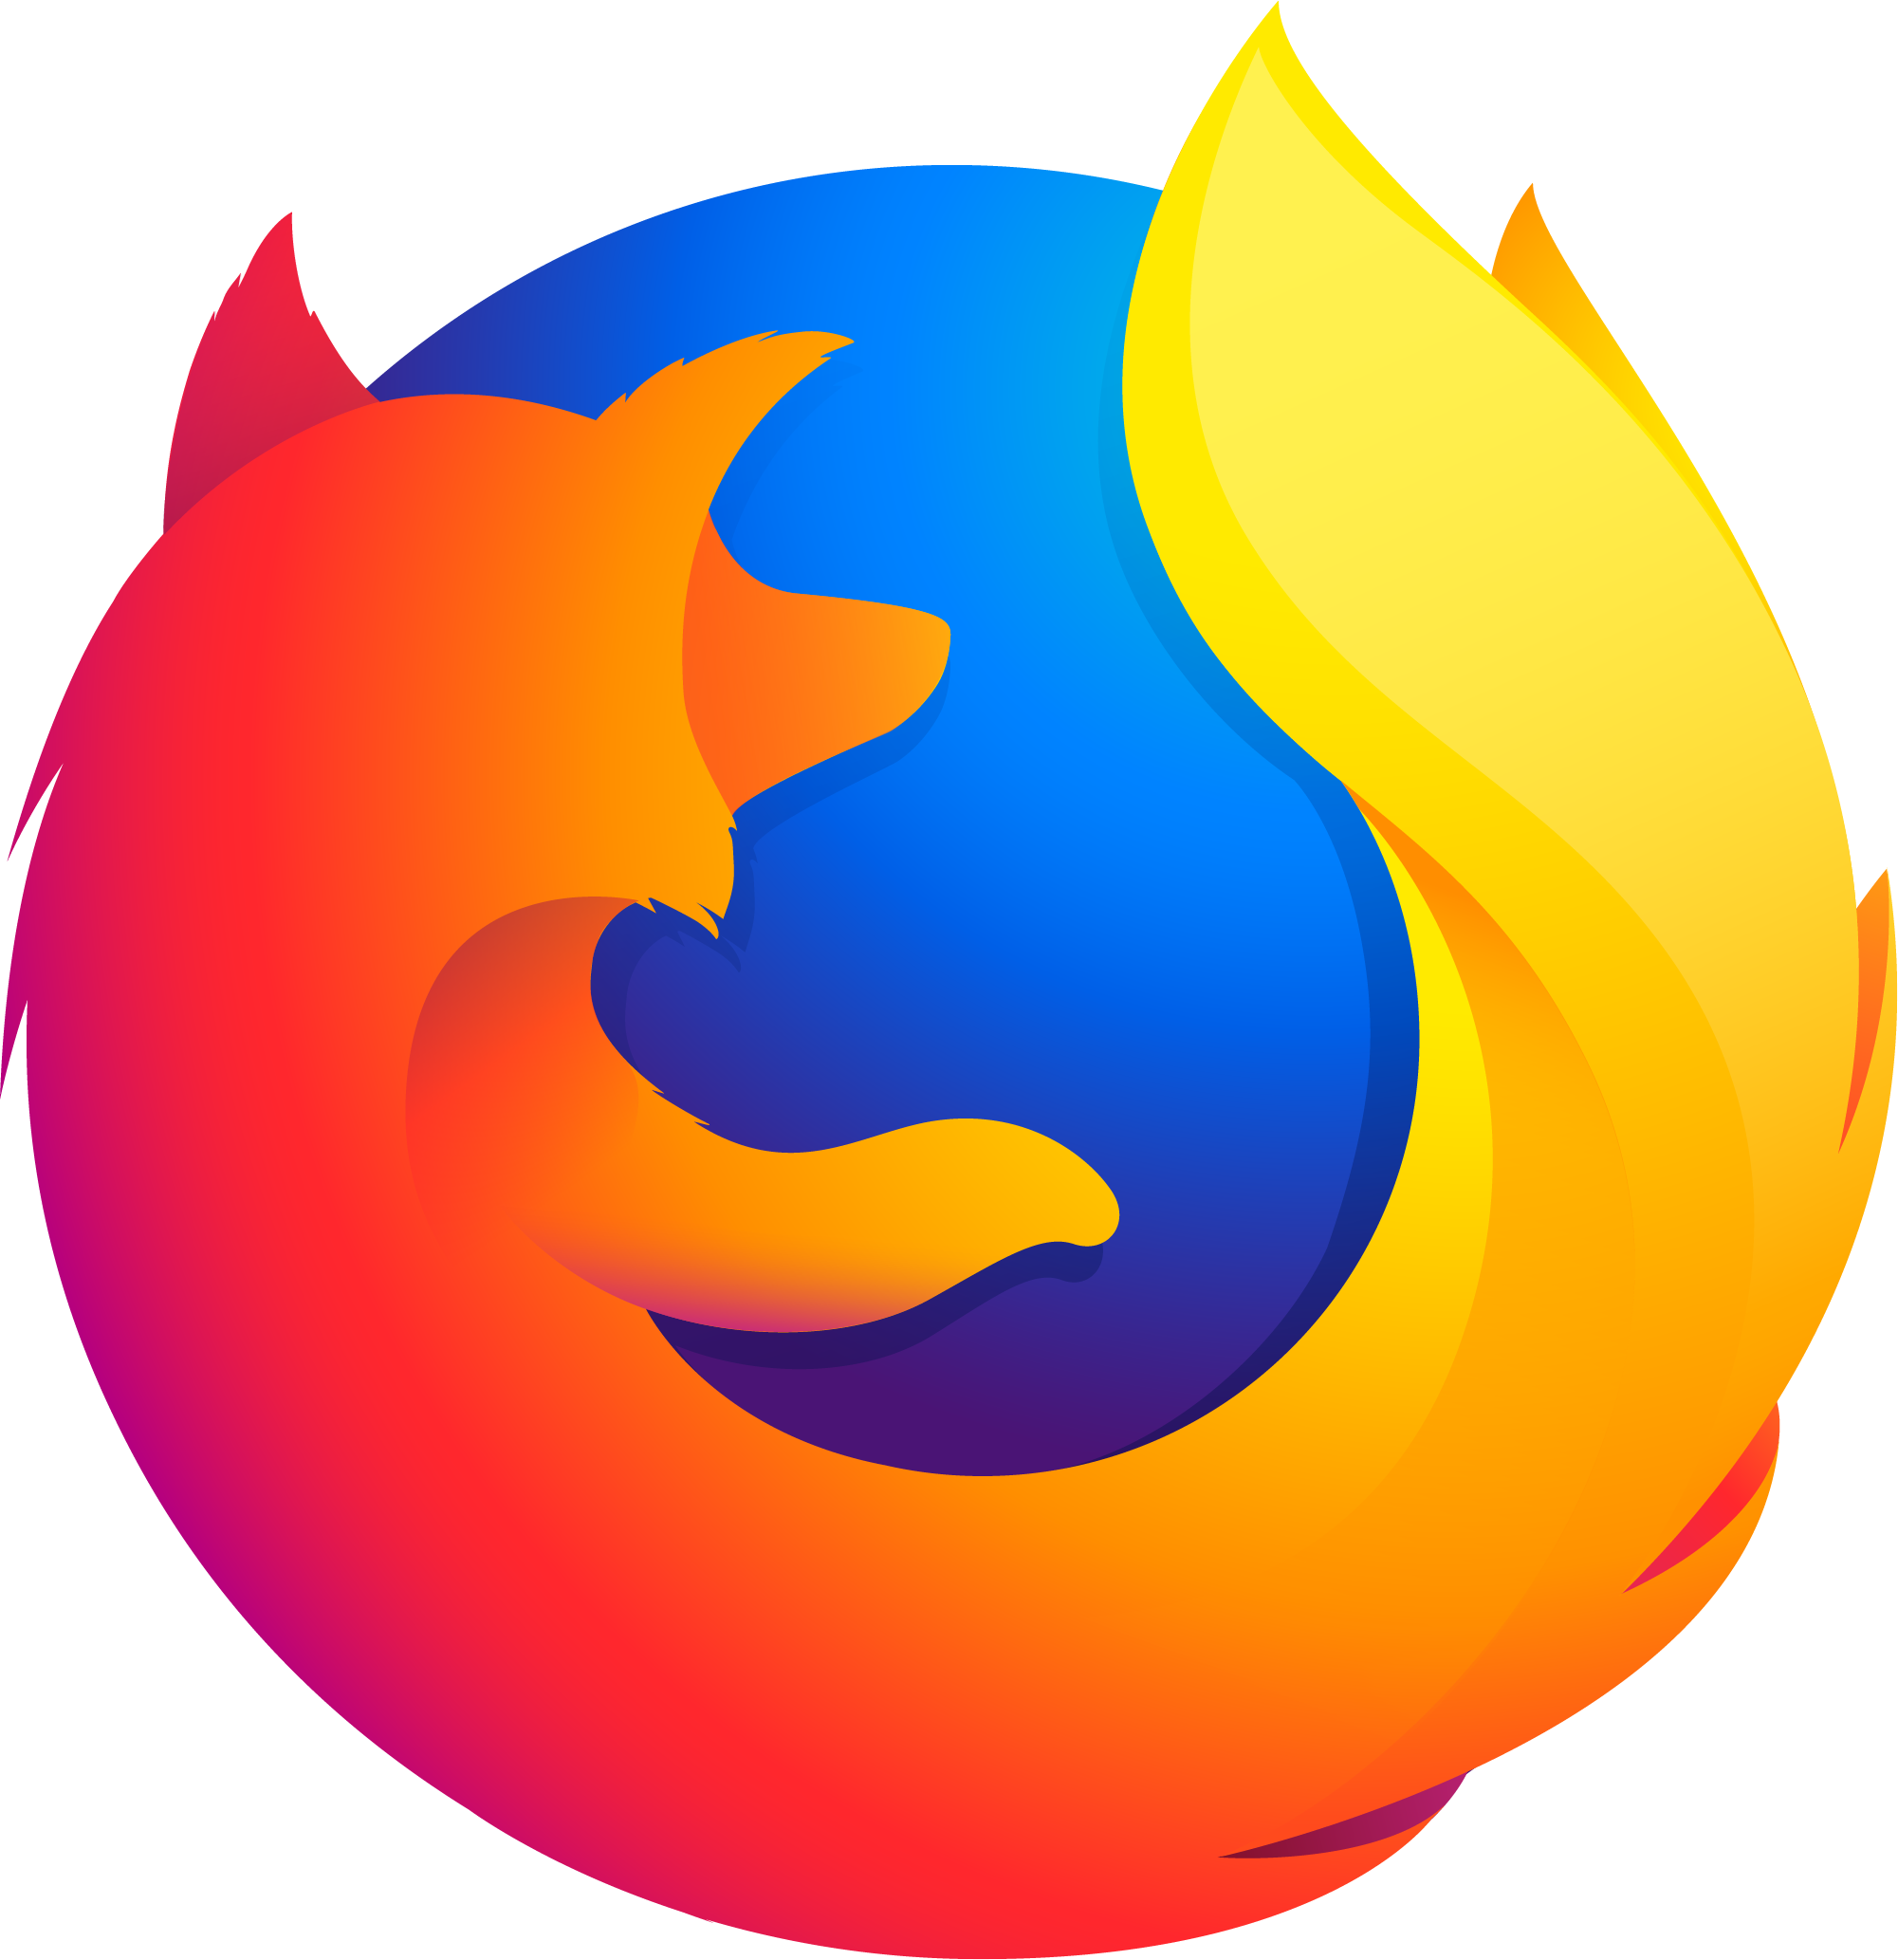 Logo de Mozilla Firefox, montre le renard en forme incurvée